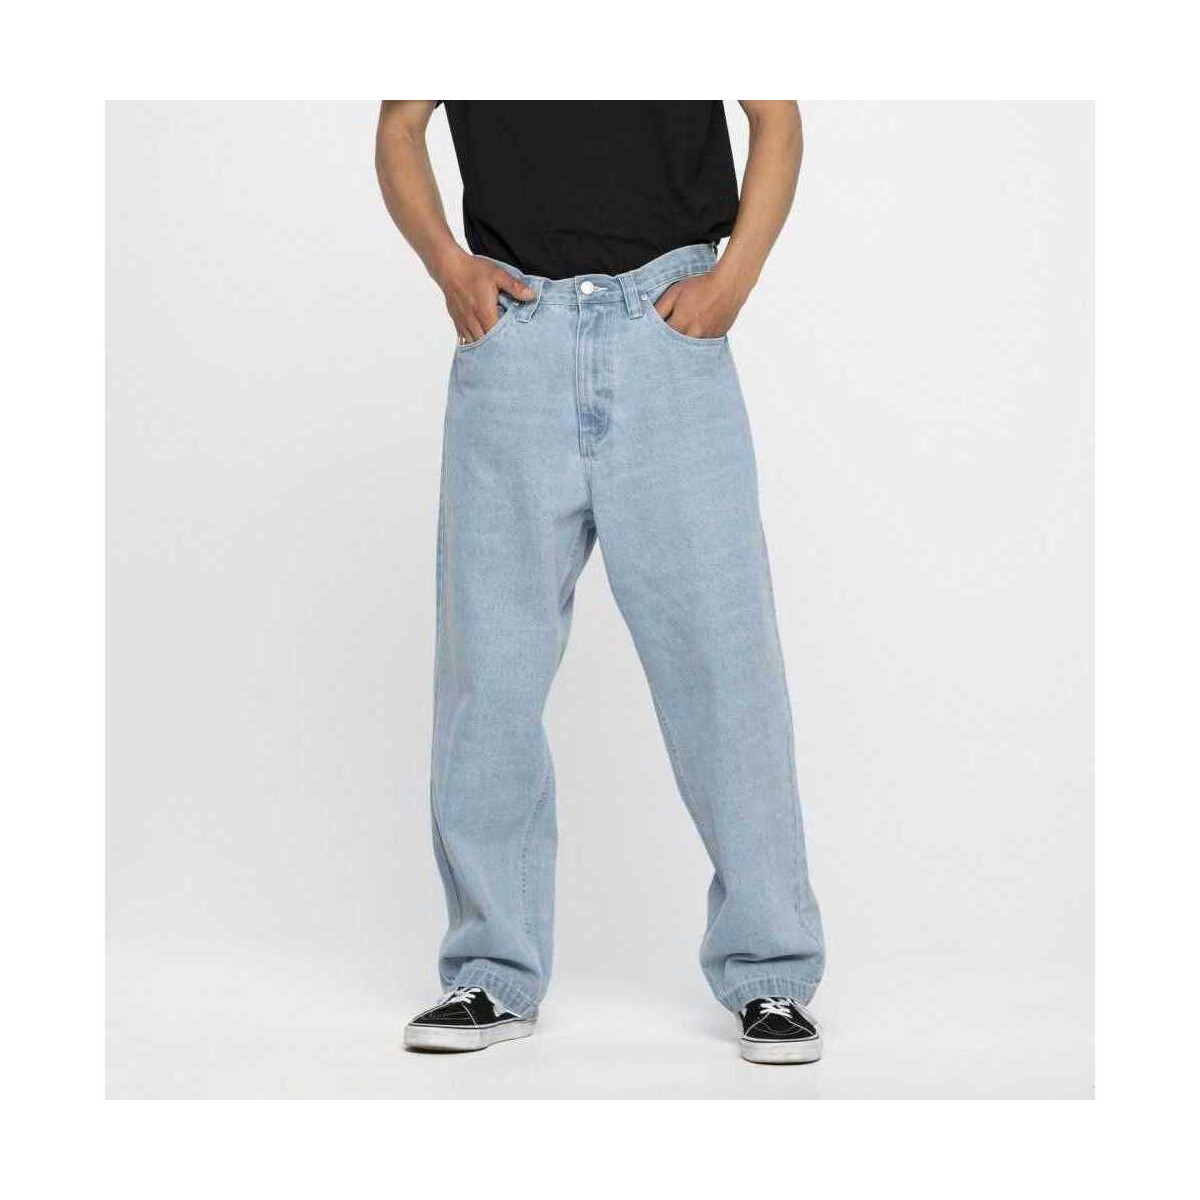 Textil Muži Kalhoty Santa Cruz Big pants Modrá